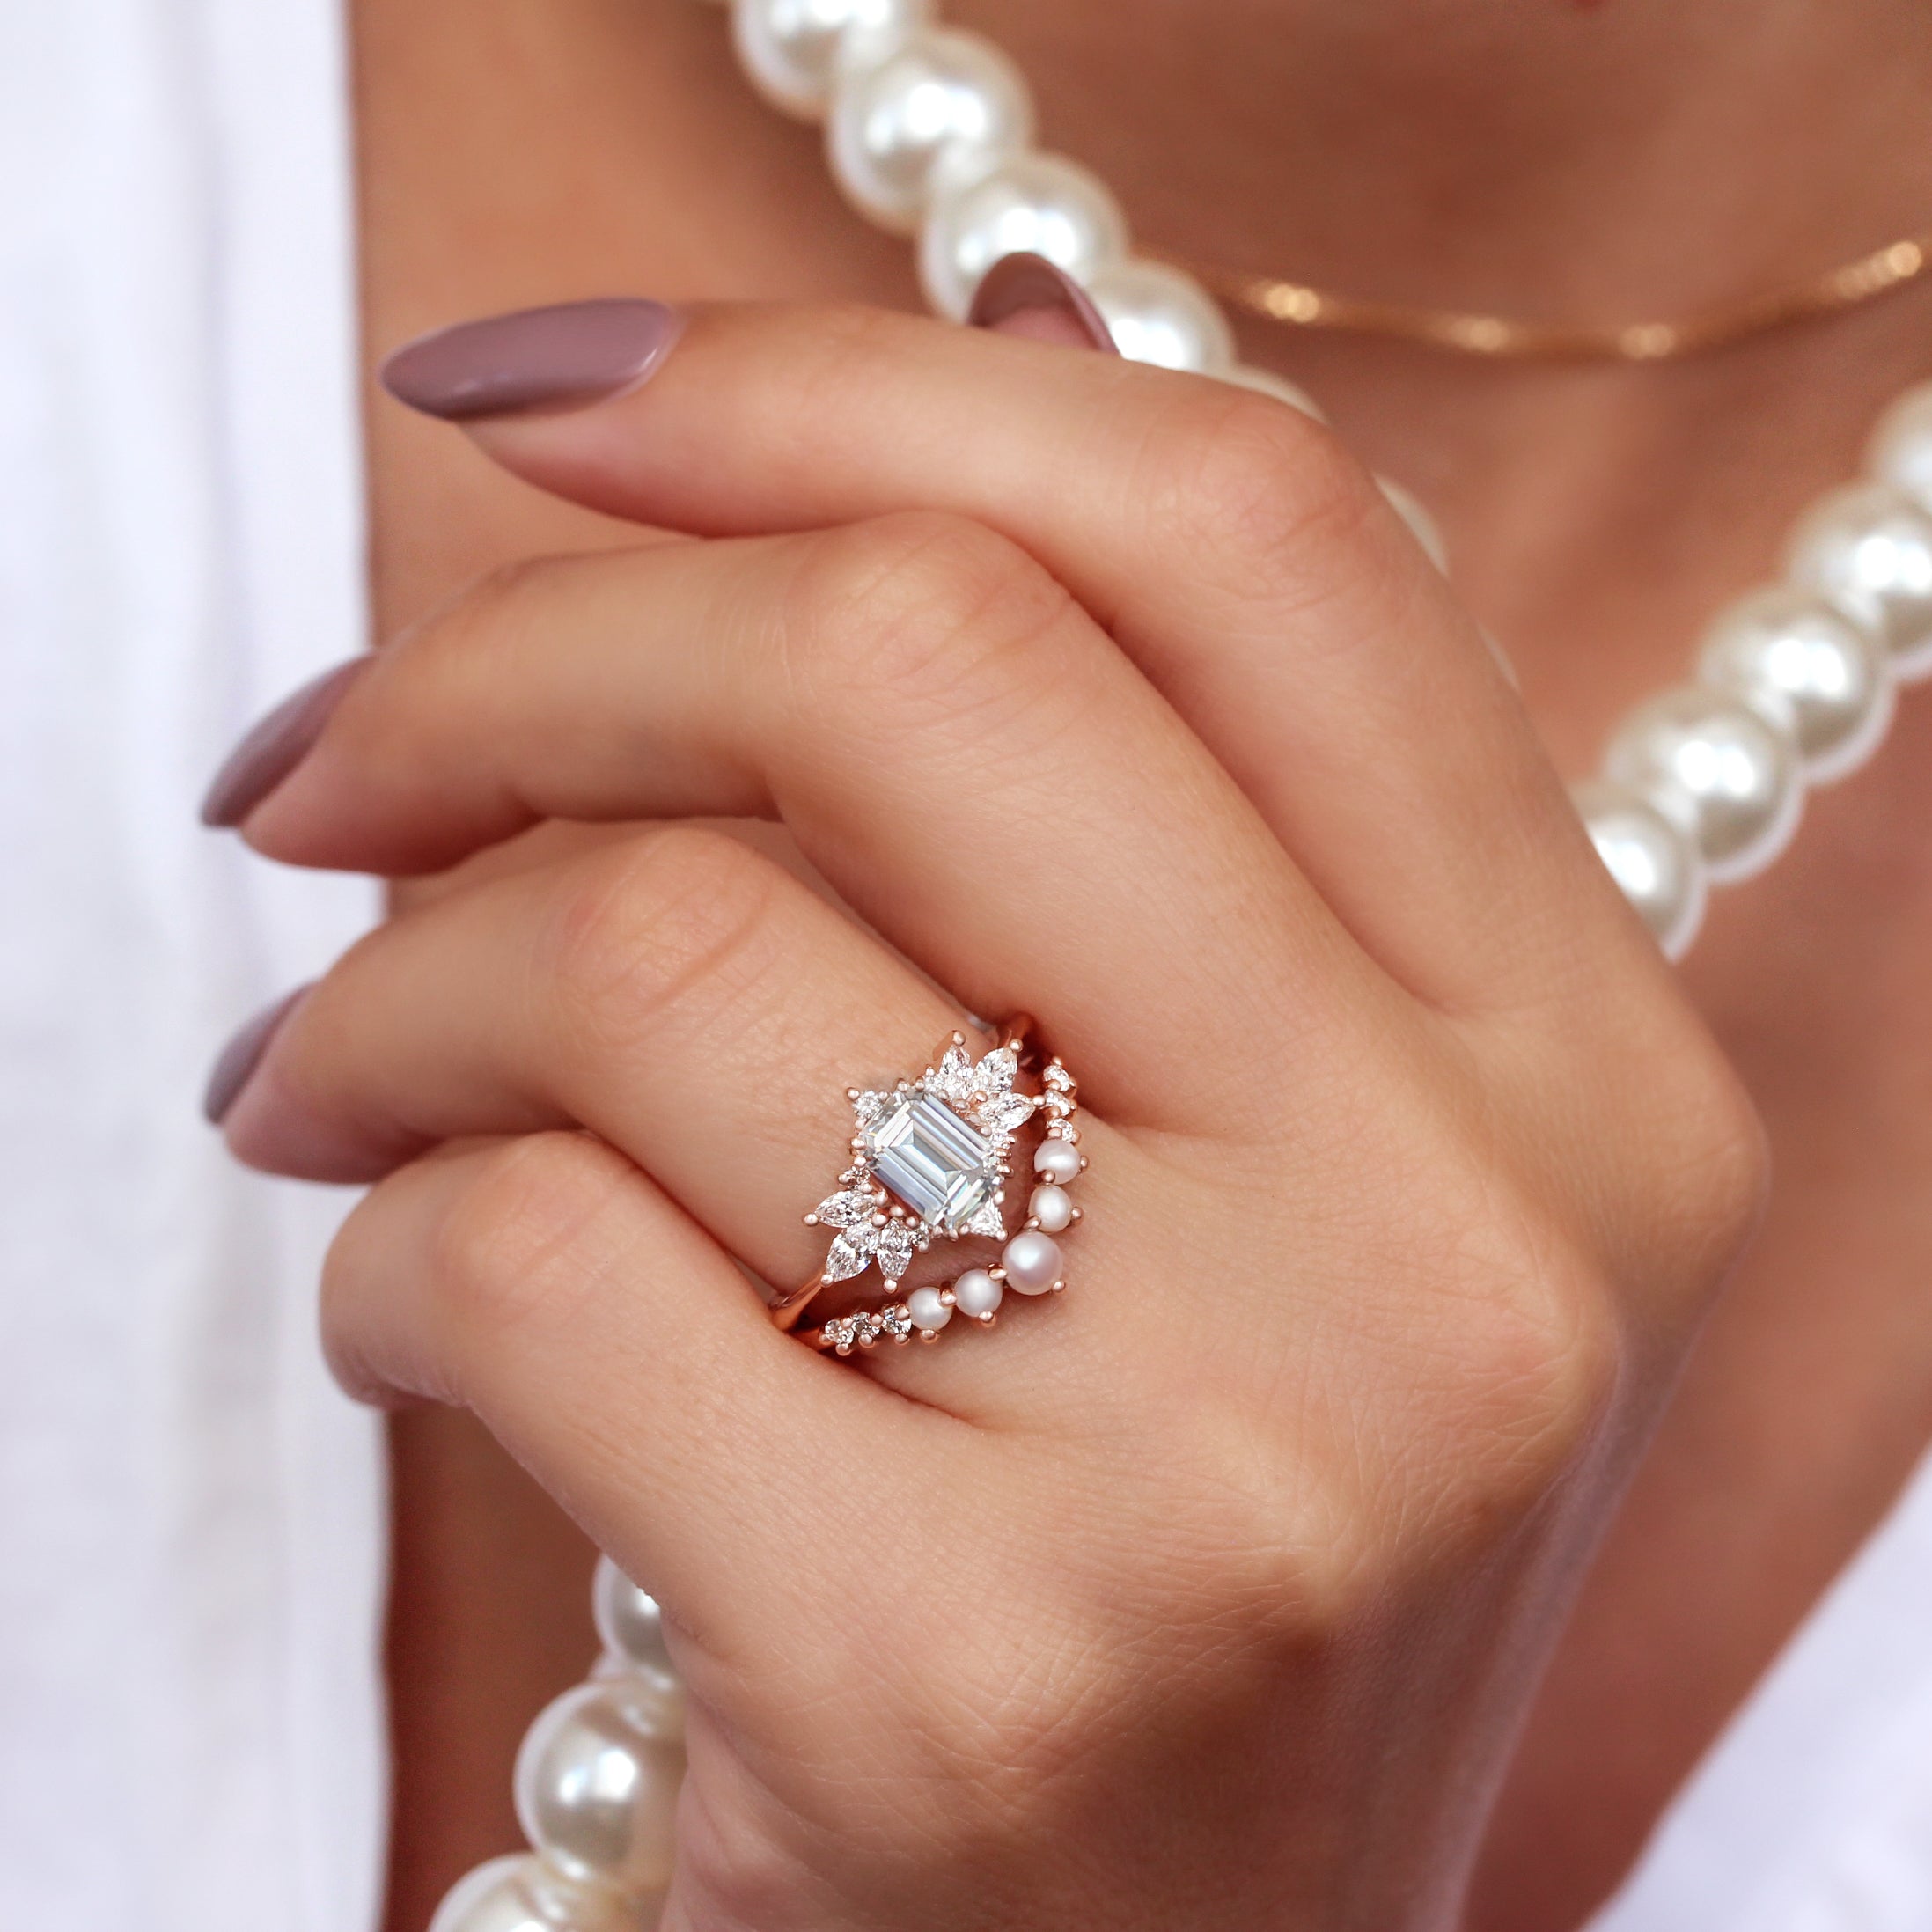 Emerald Cut Diamond Engagement Ring Spark And Pearls And Diamonds Wedd Sillyshinydiamonds